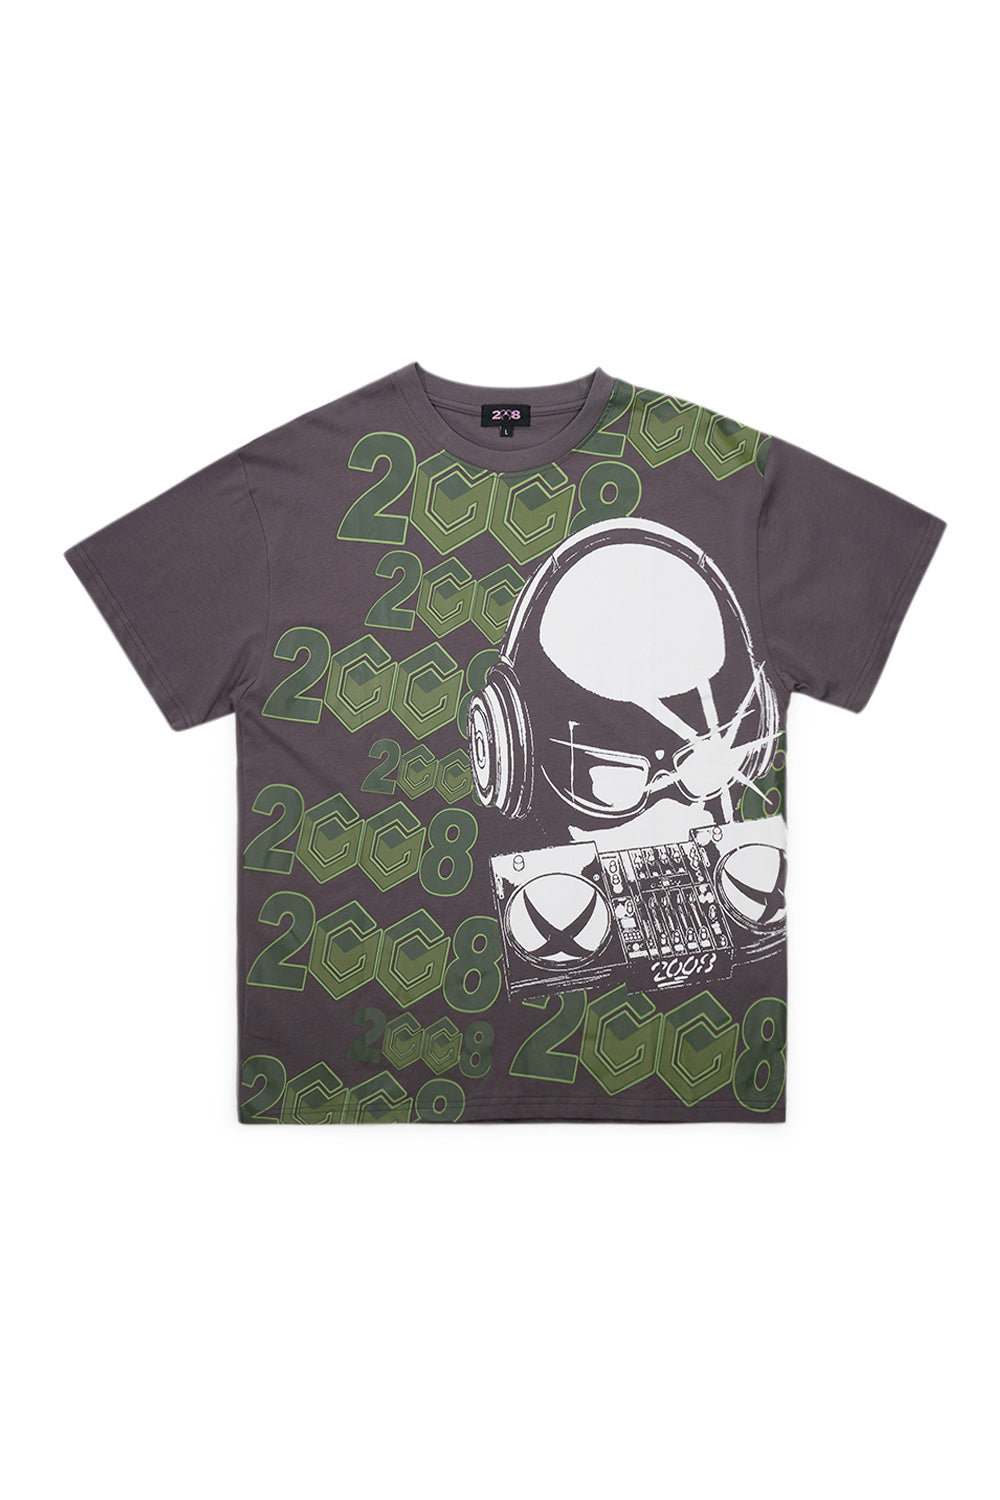 Fuck This Industry Patrick DJ T-Shirt Charcoal Grey | BONKERS